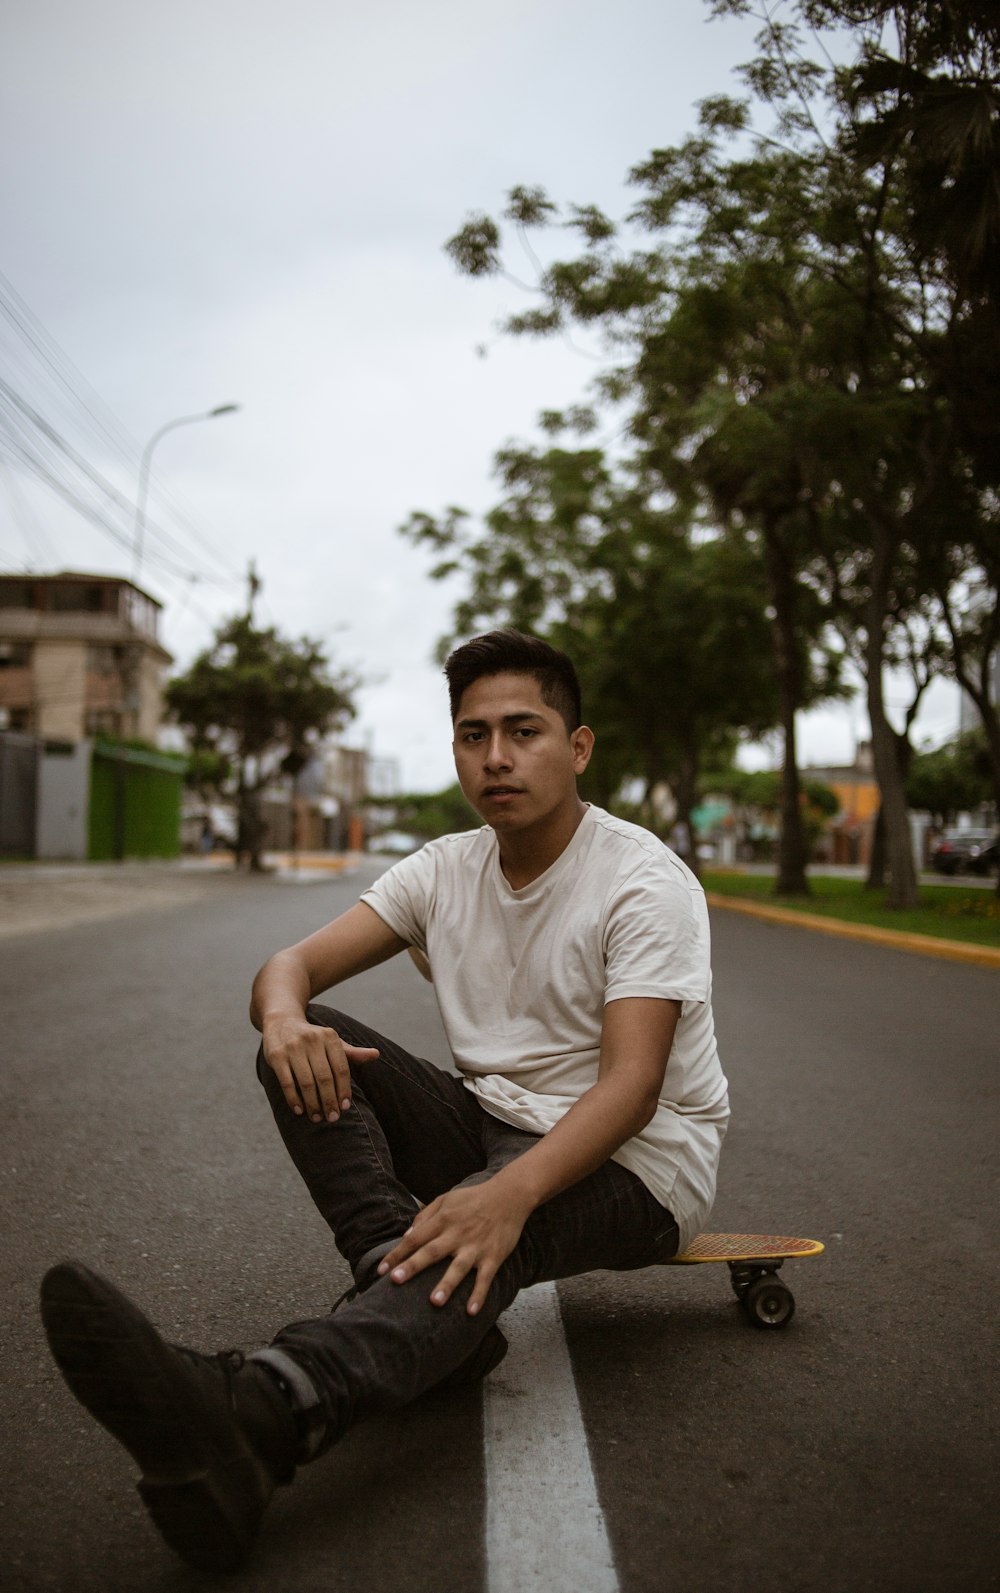 man sitting on skateboard